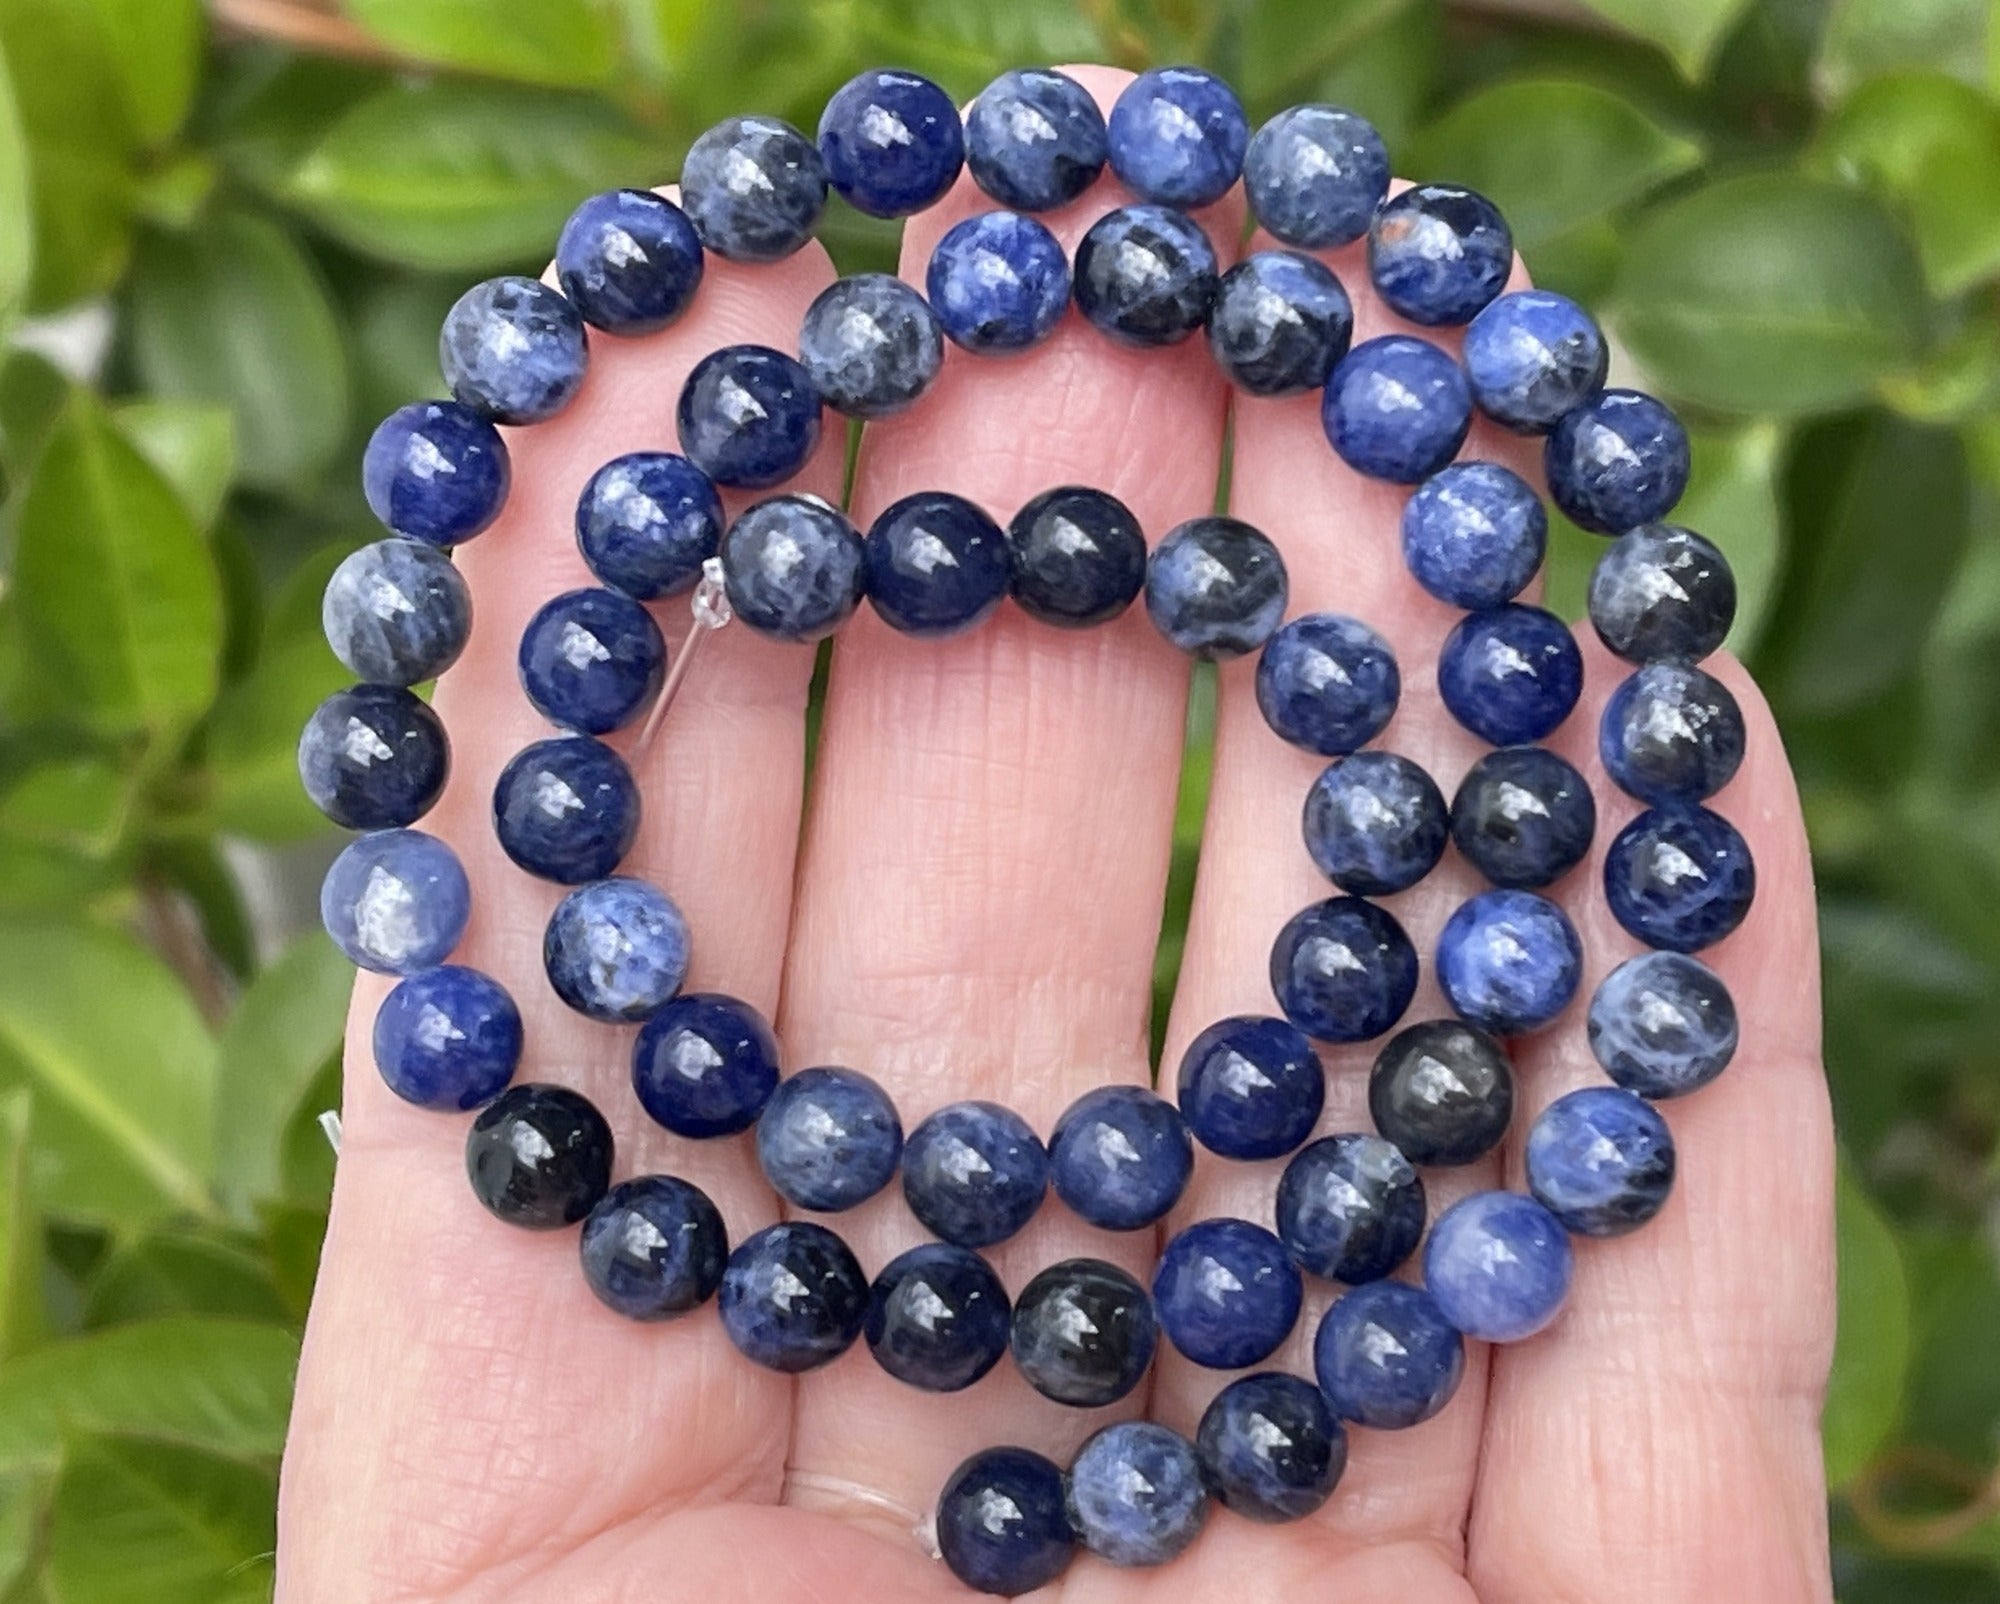 Blue Sodalite 6mm round polished natural gemstone beads 15" strand